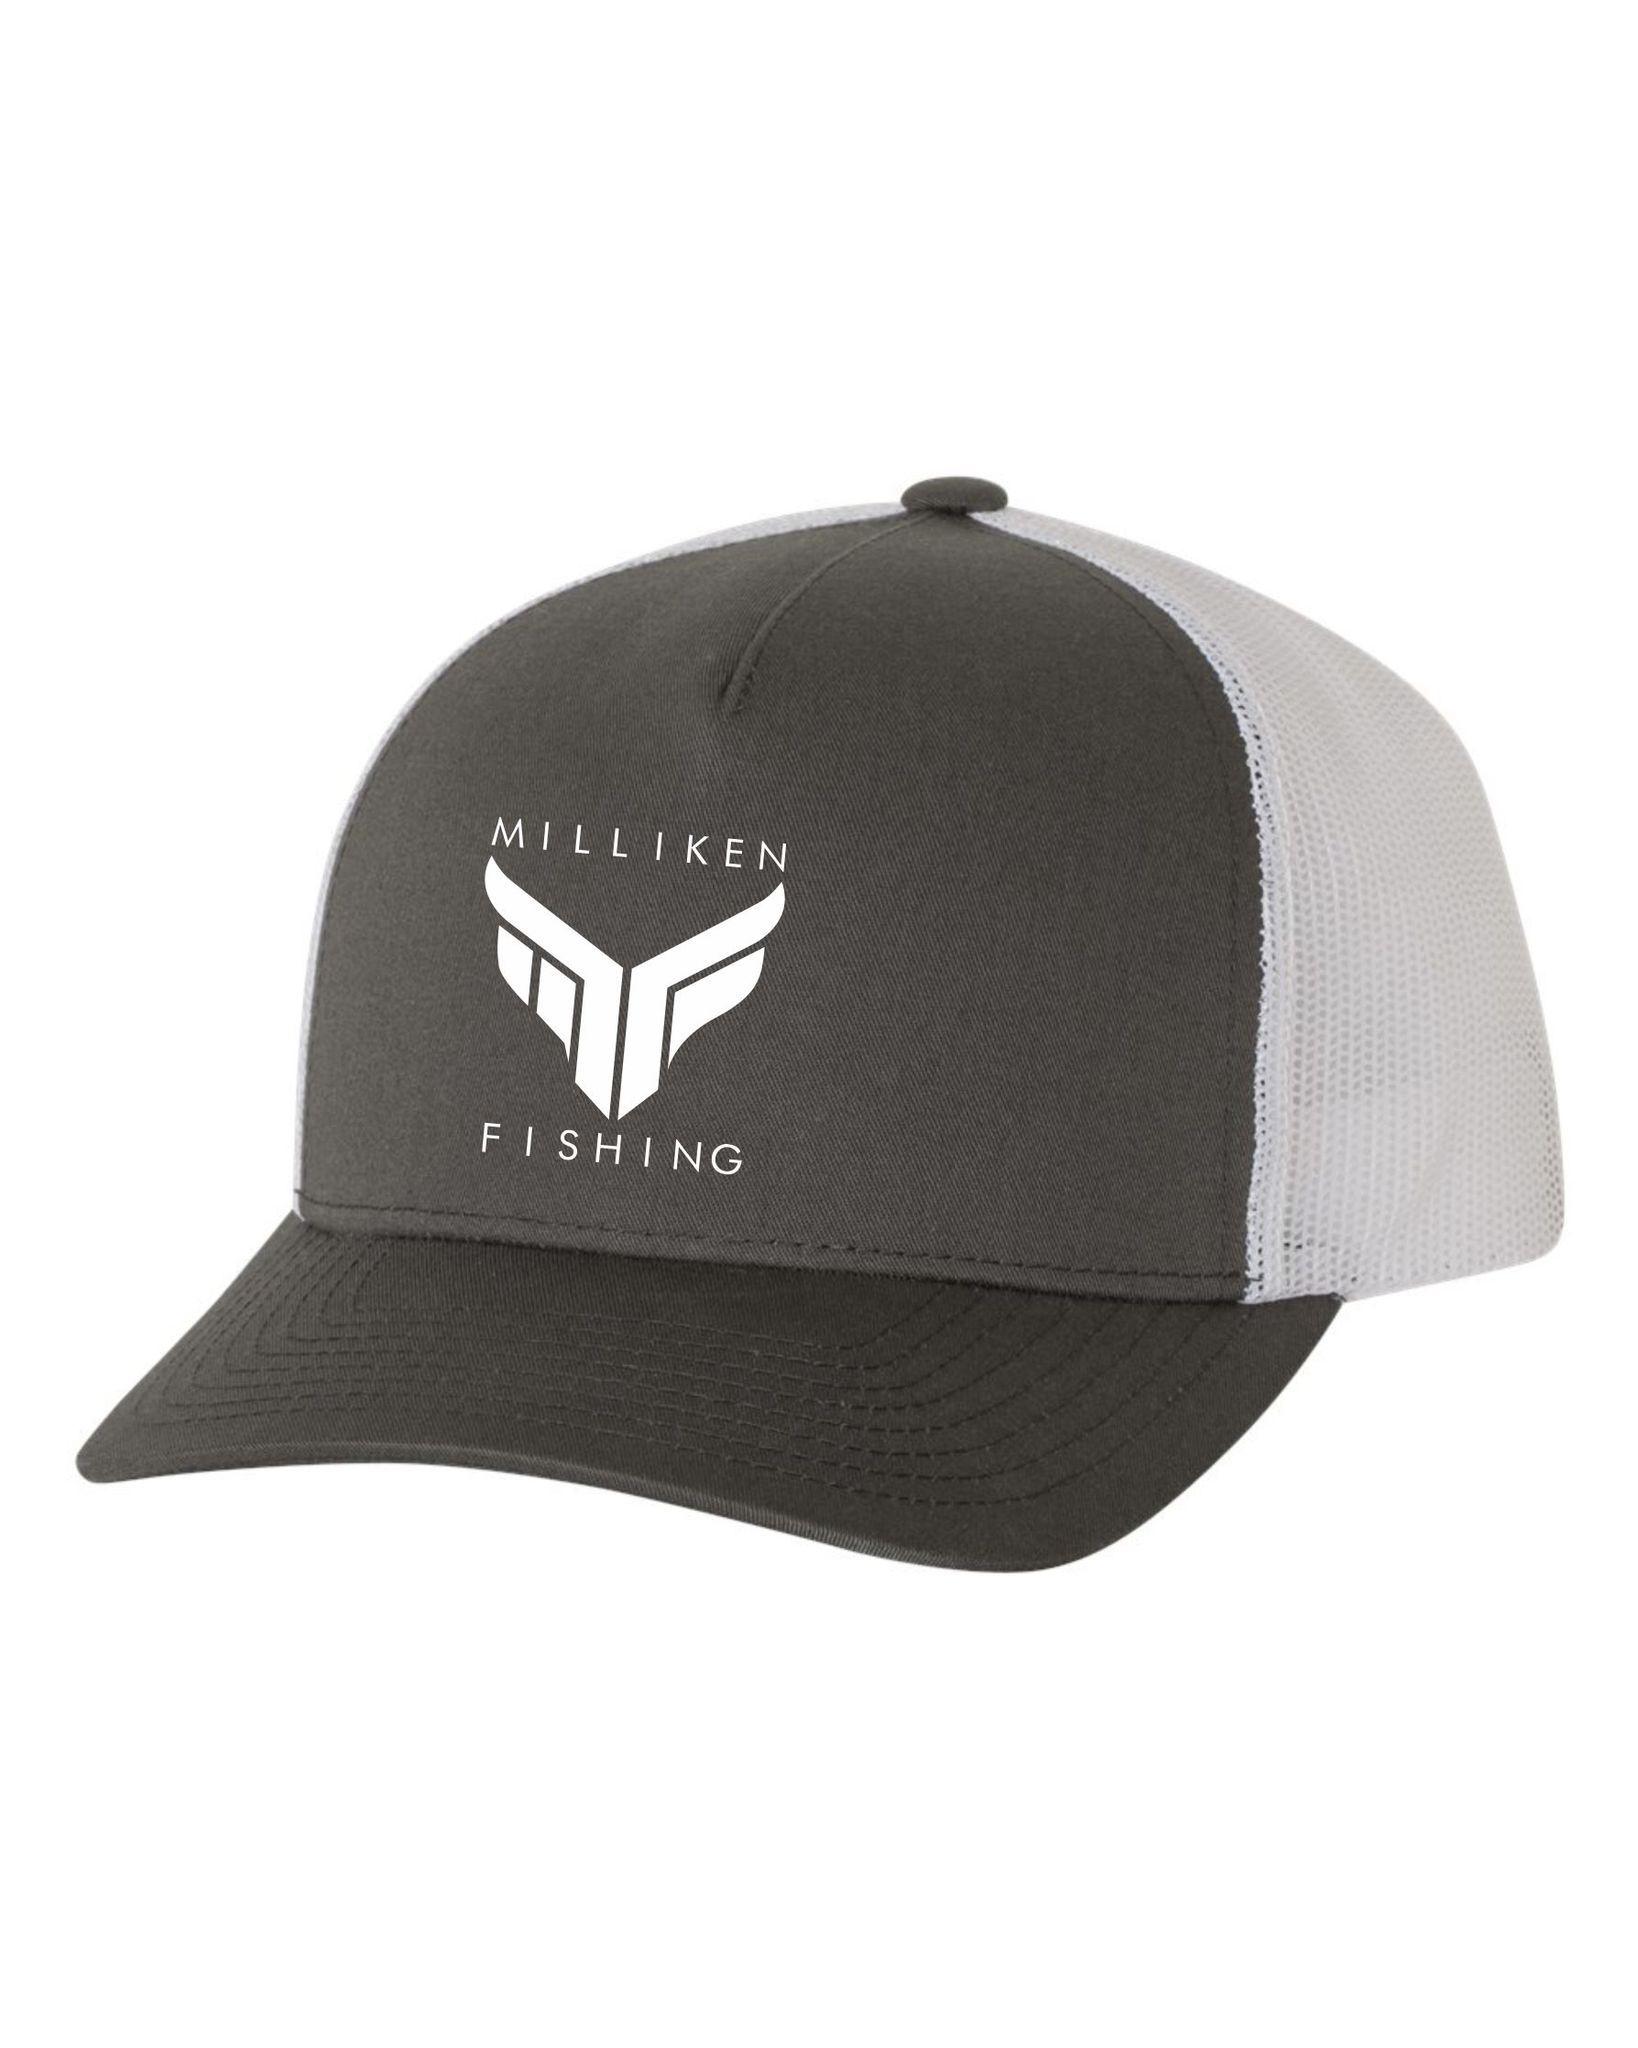 Milliken Logo - Milliken Fishing Semi-Curved Bill (Charcoal)